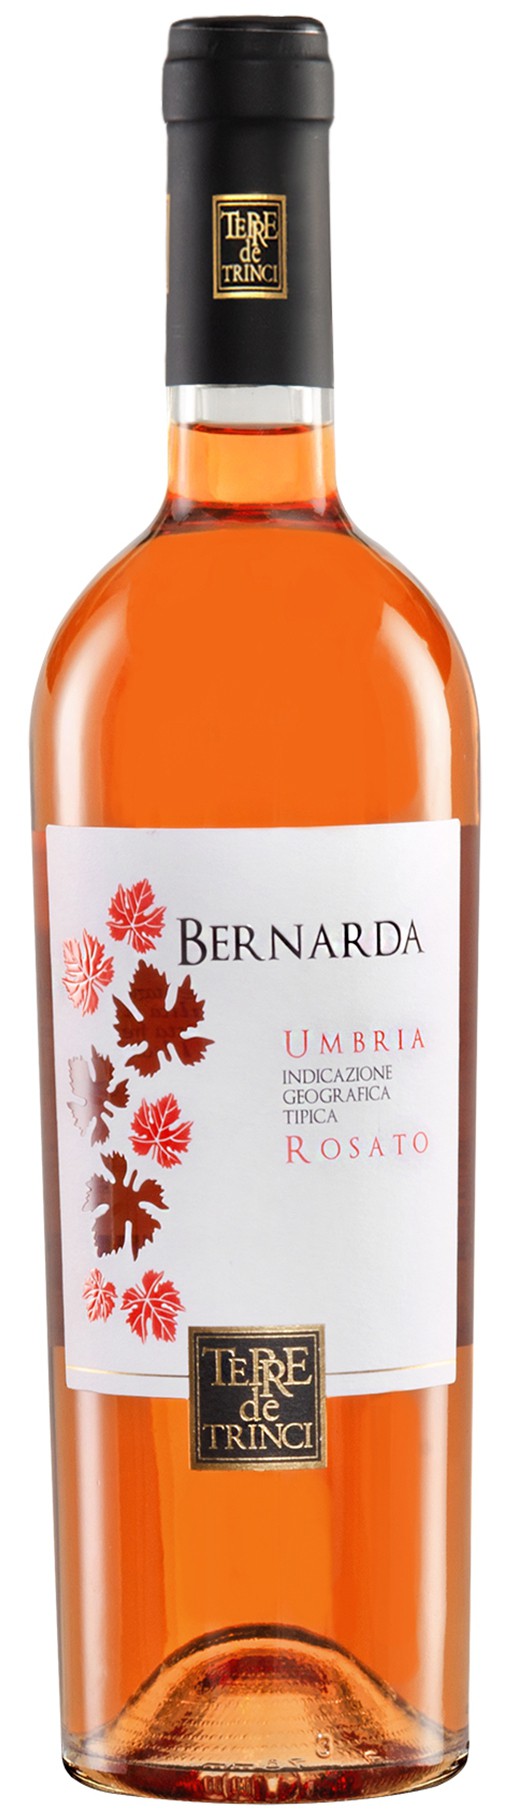 La Bernarda - Umbria IGT Rosato